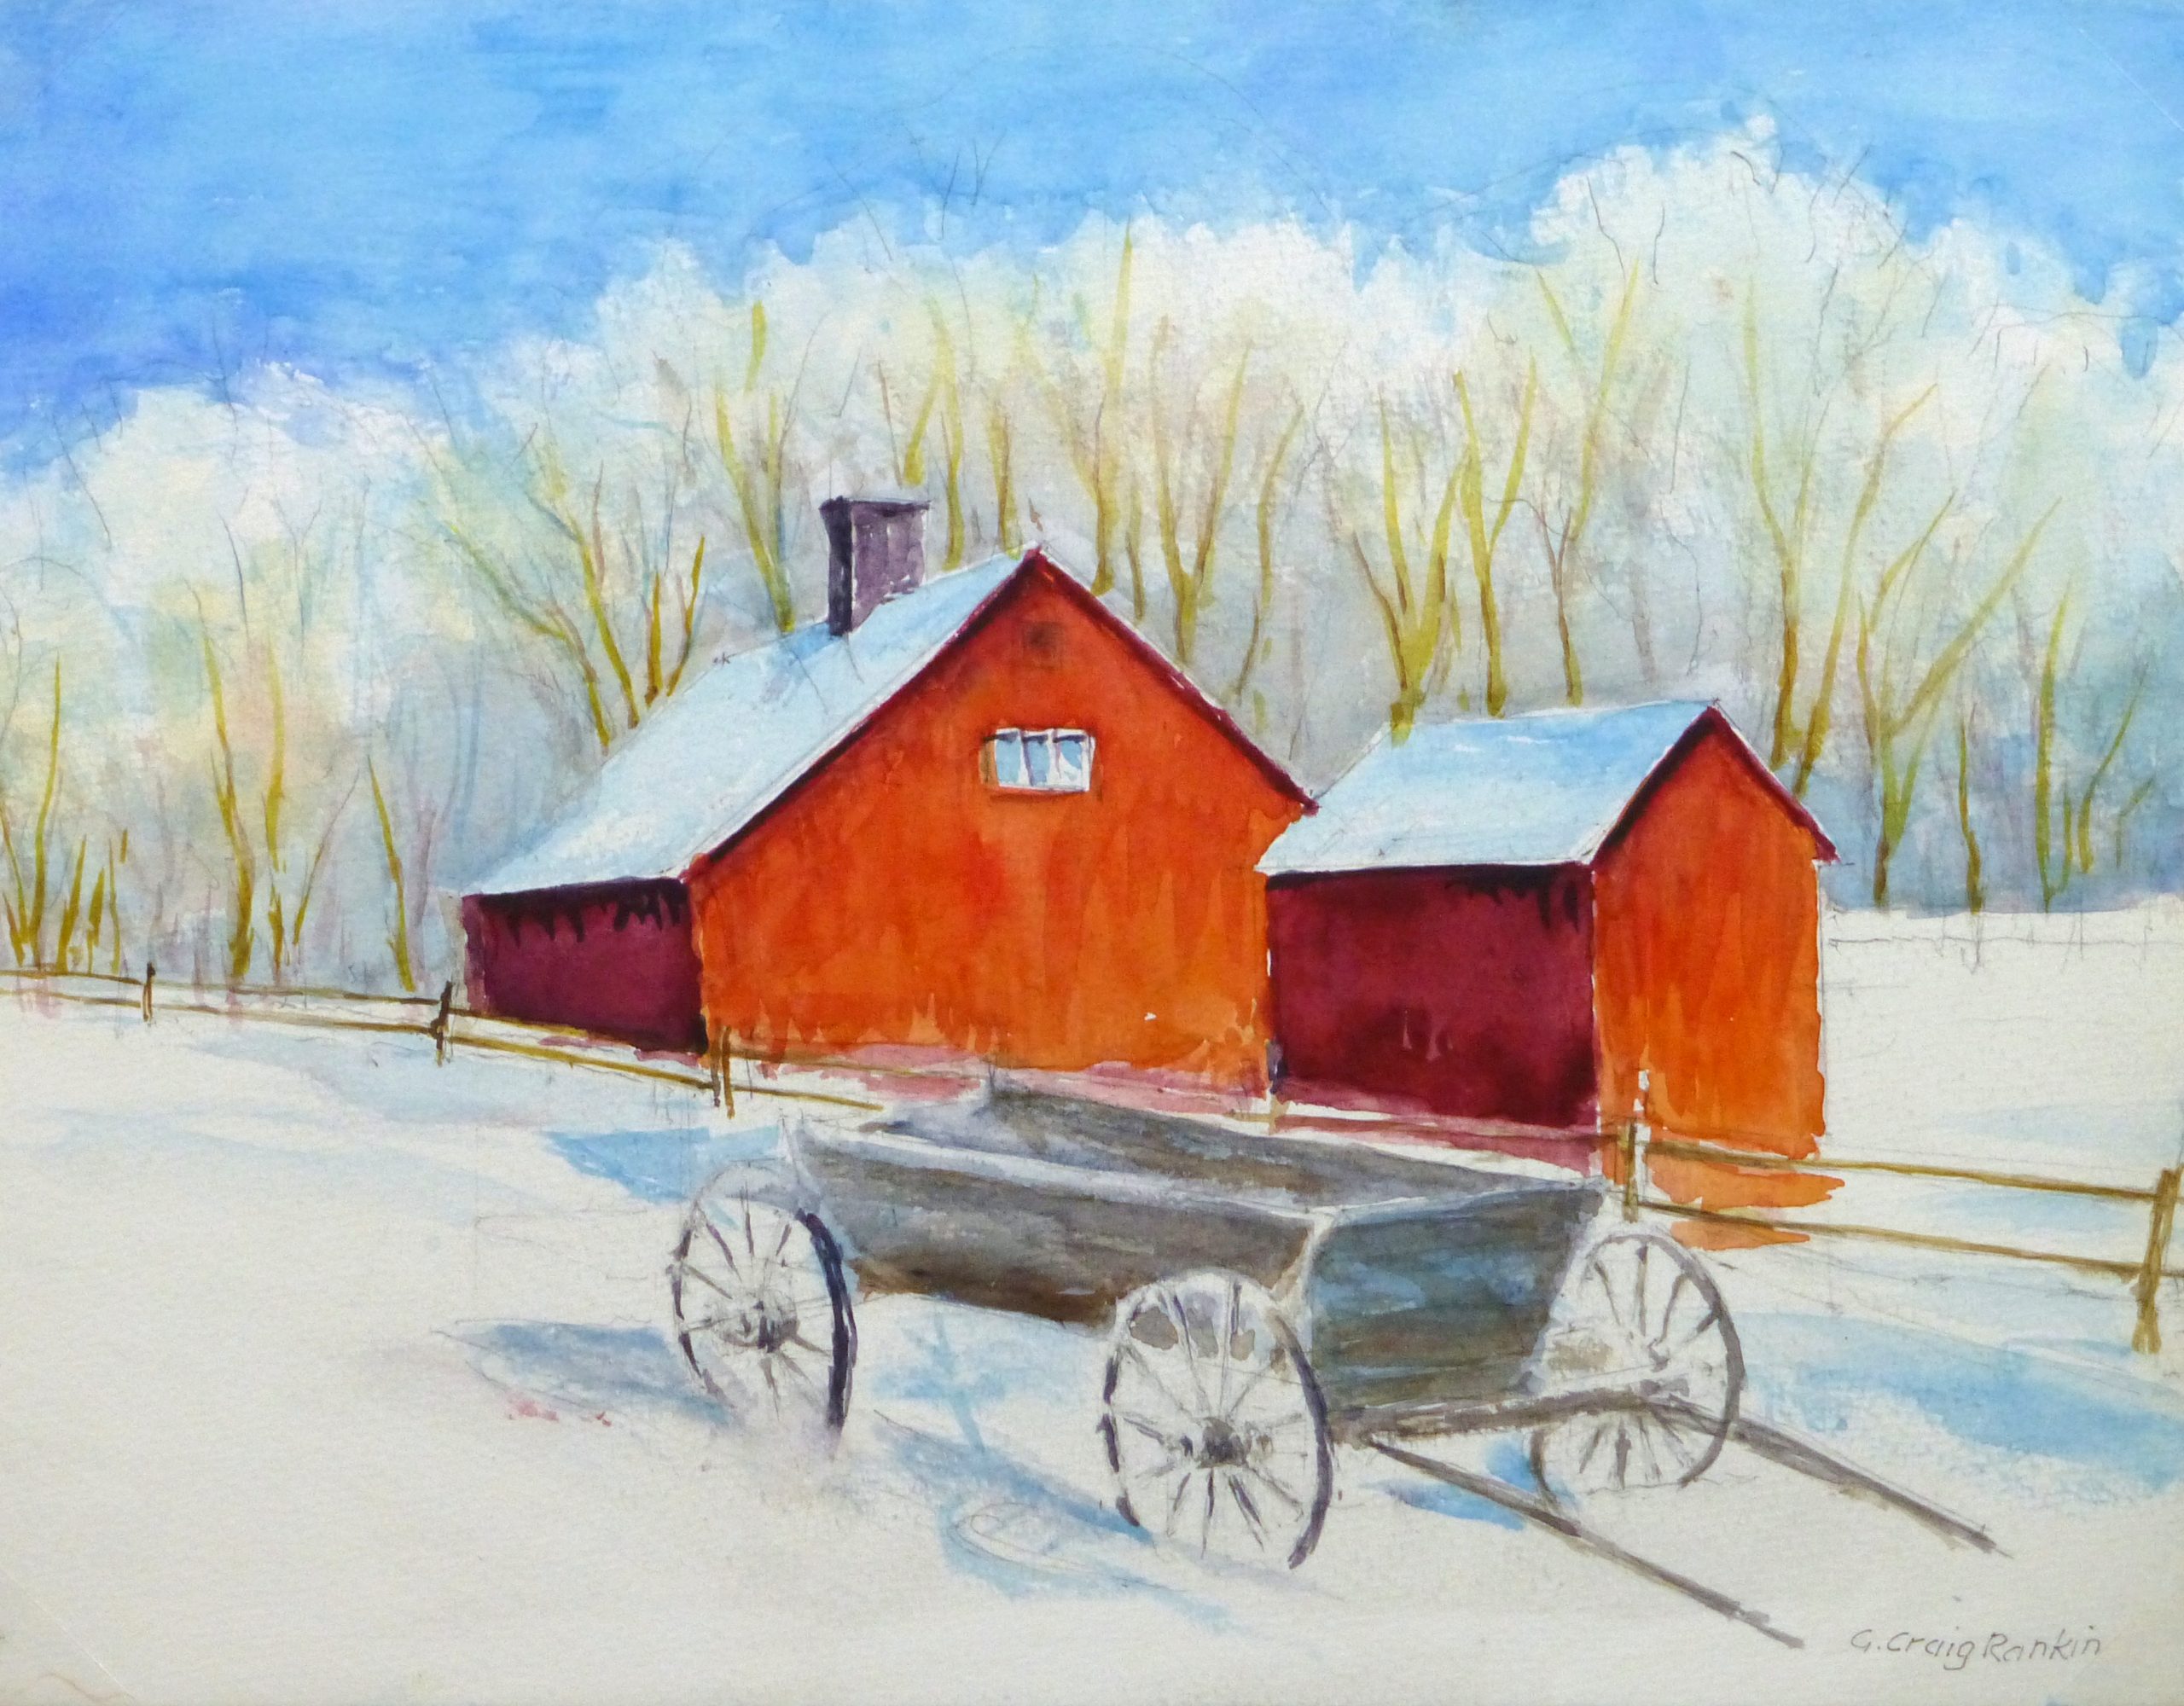 barn painting